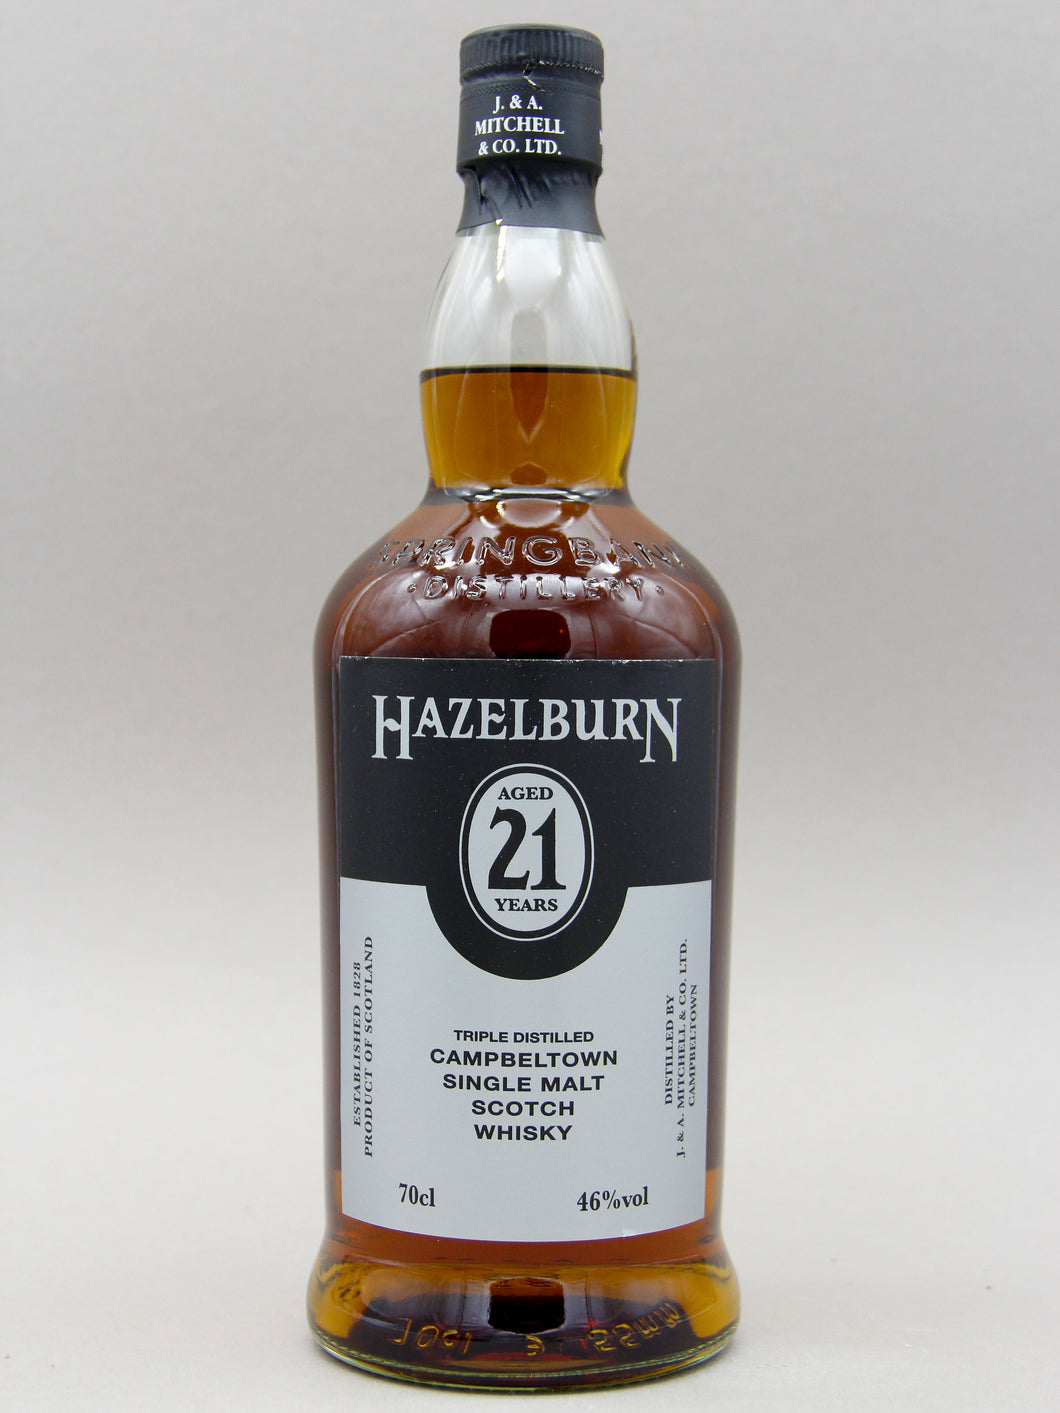 Hazelburn 21 Years, November 2021, Campbeltown Single Malt Scotch Whisky (46%, 70cl)